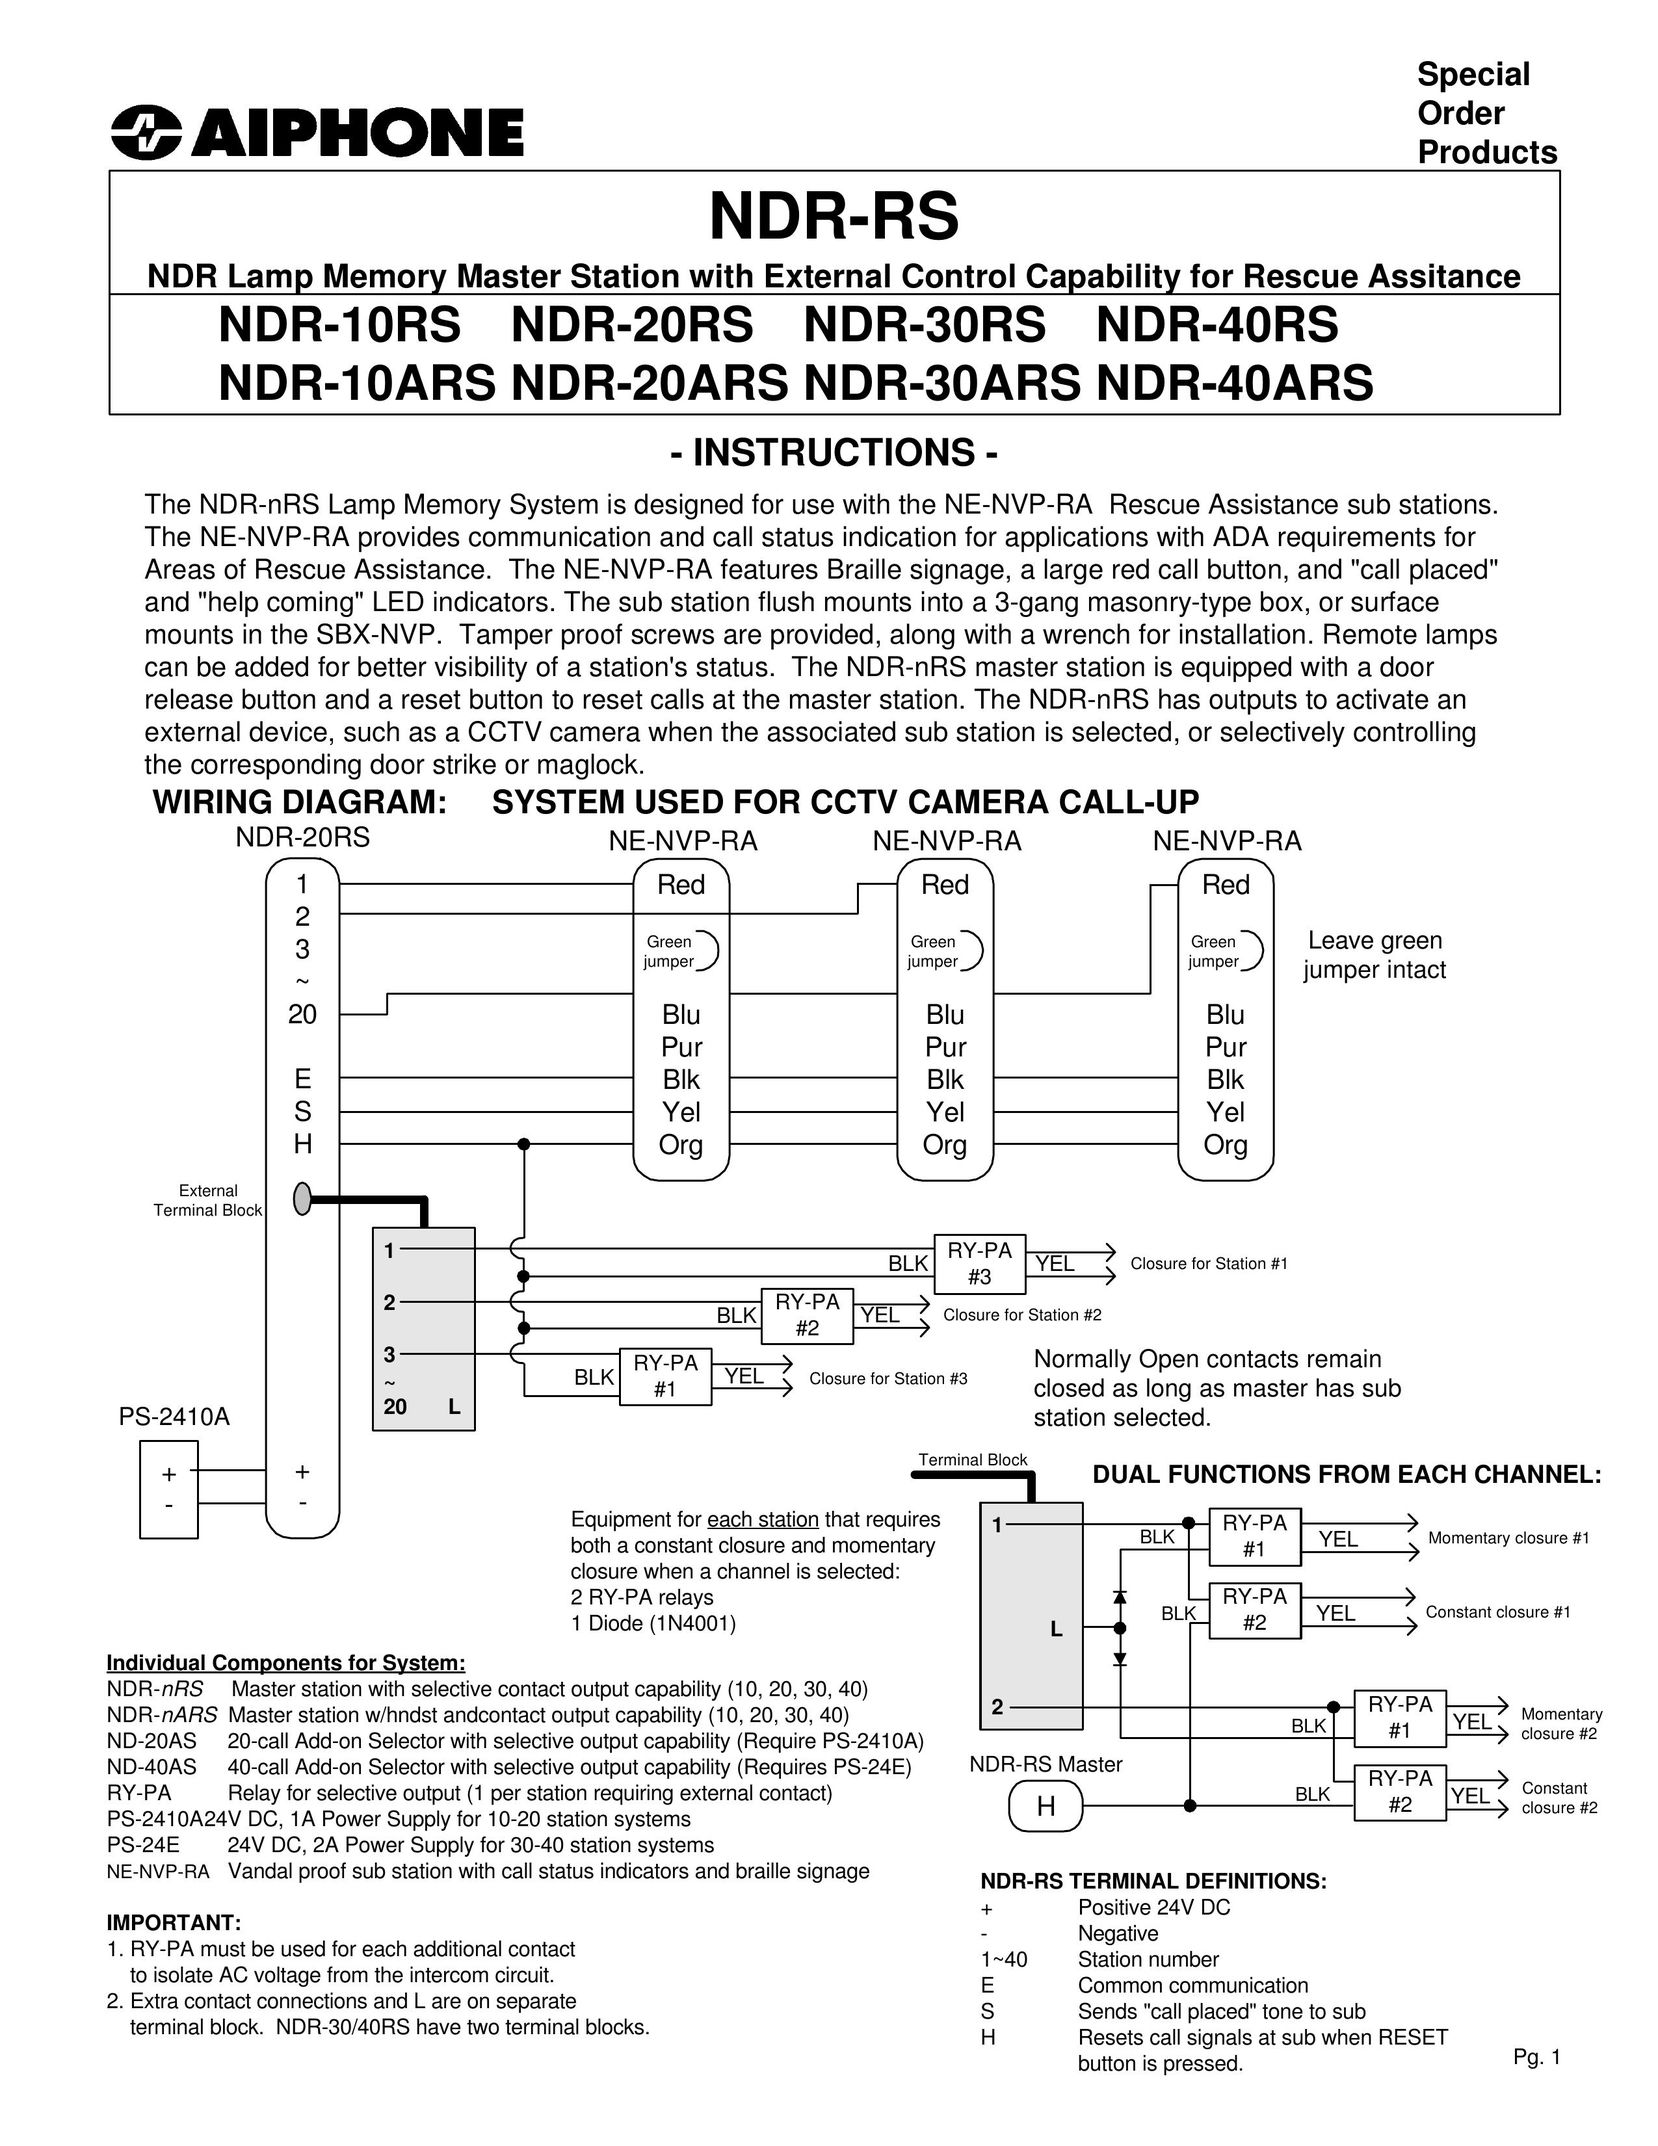 Aiphone NDR-40ARS Telephone User Manual